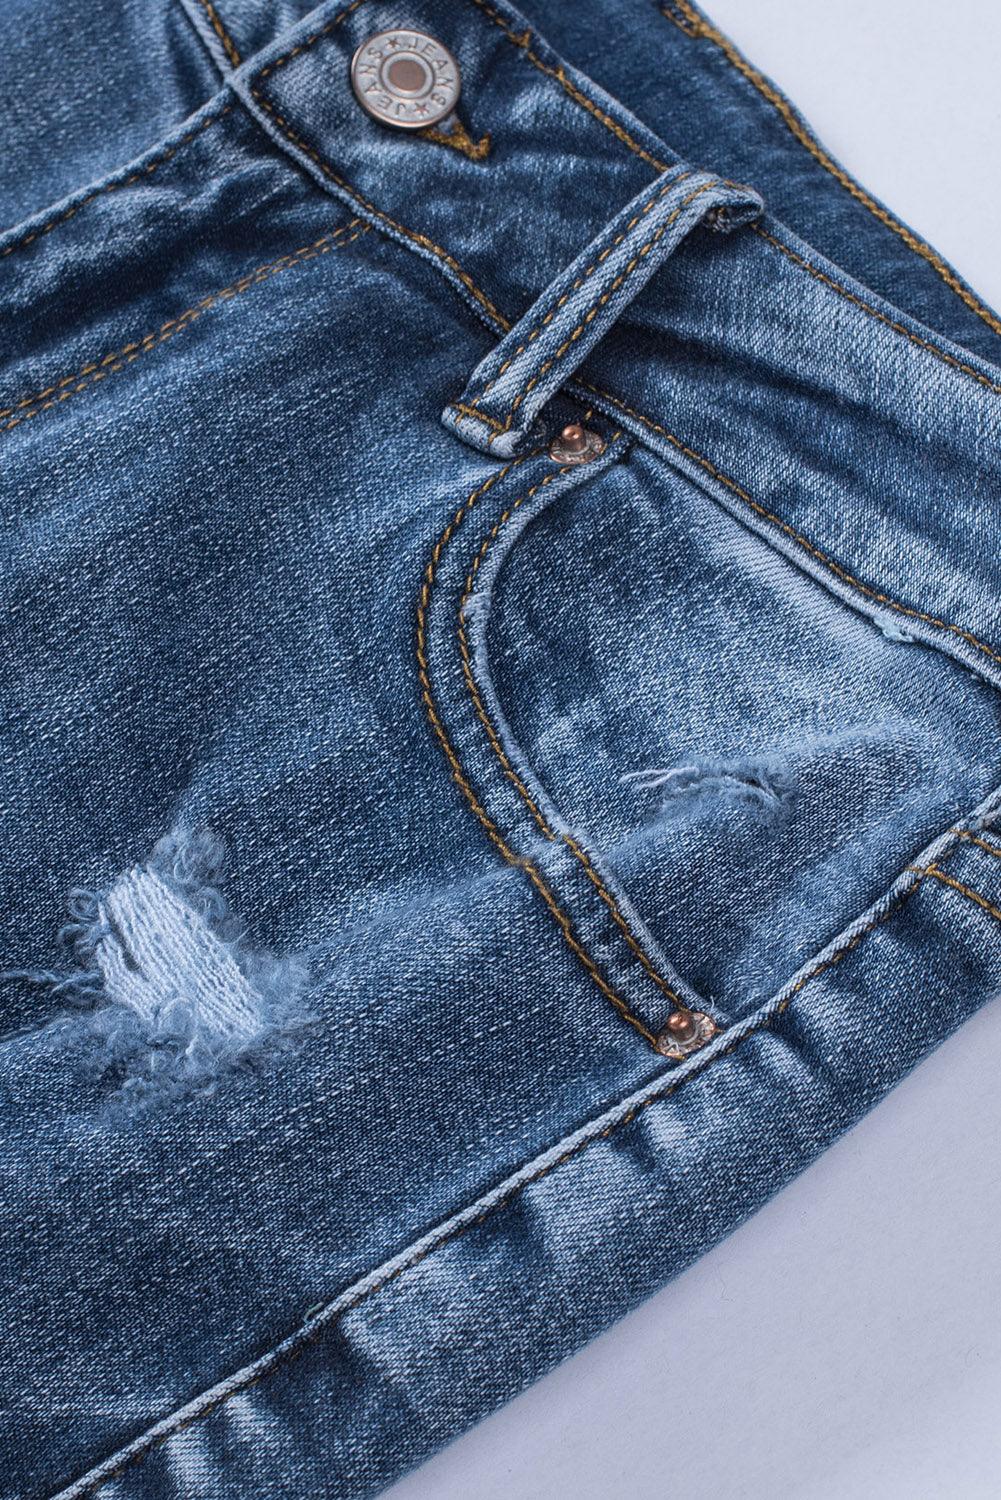 Distressed Frayed Hem Cropped Jeans - Flyclothing LLC